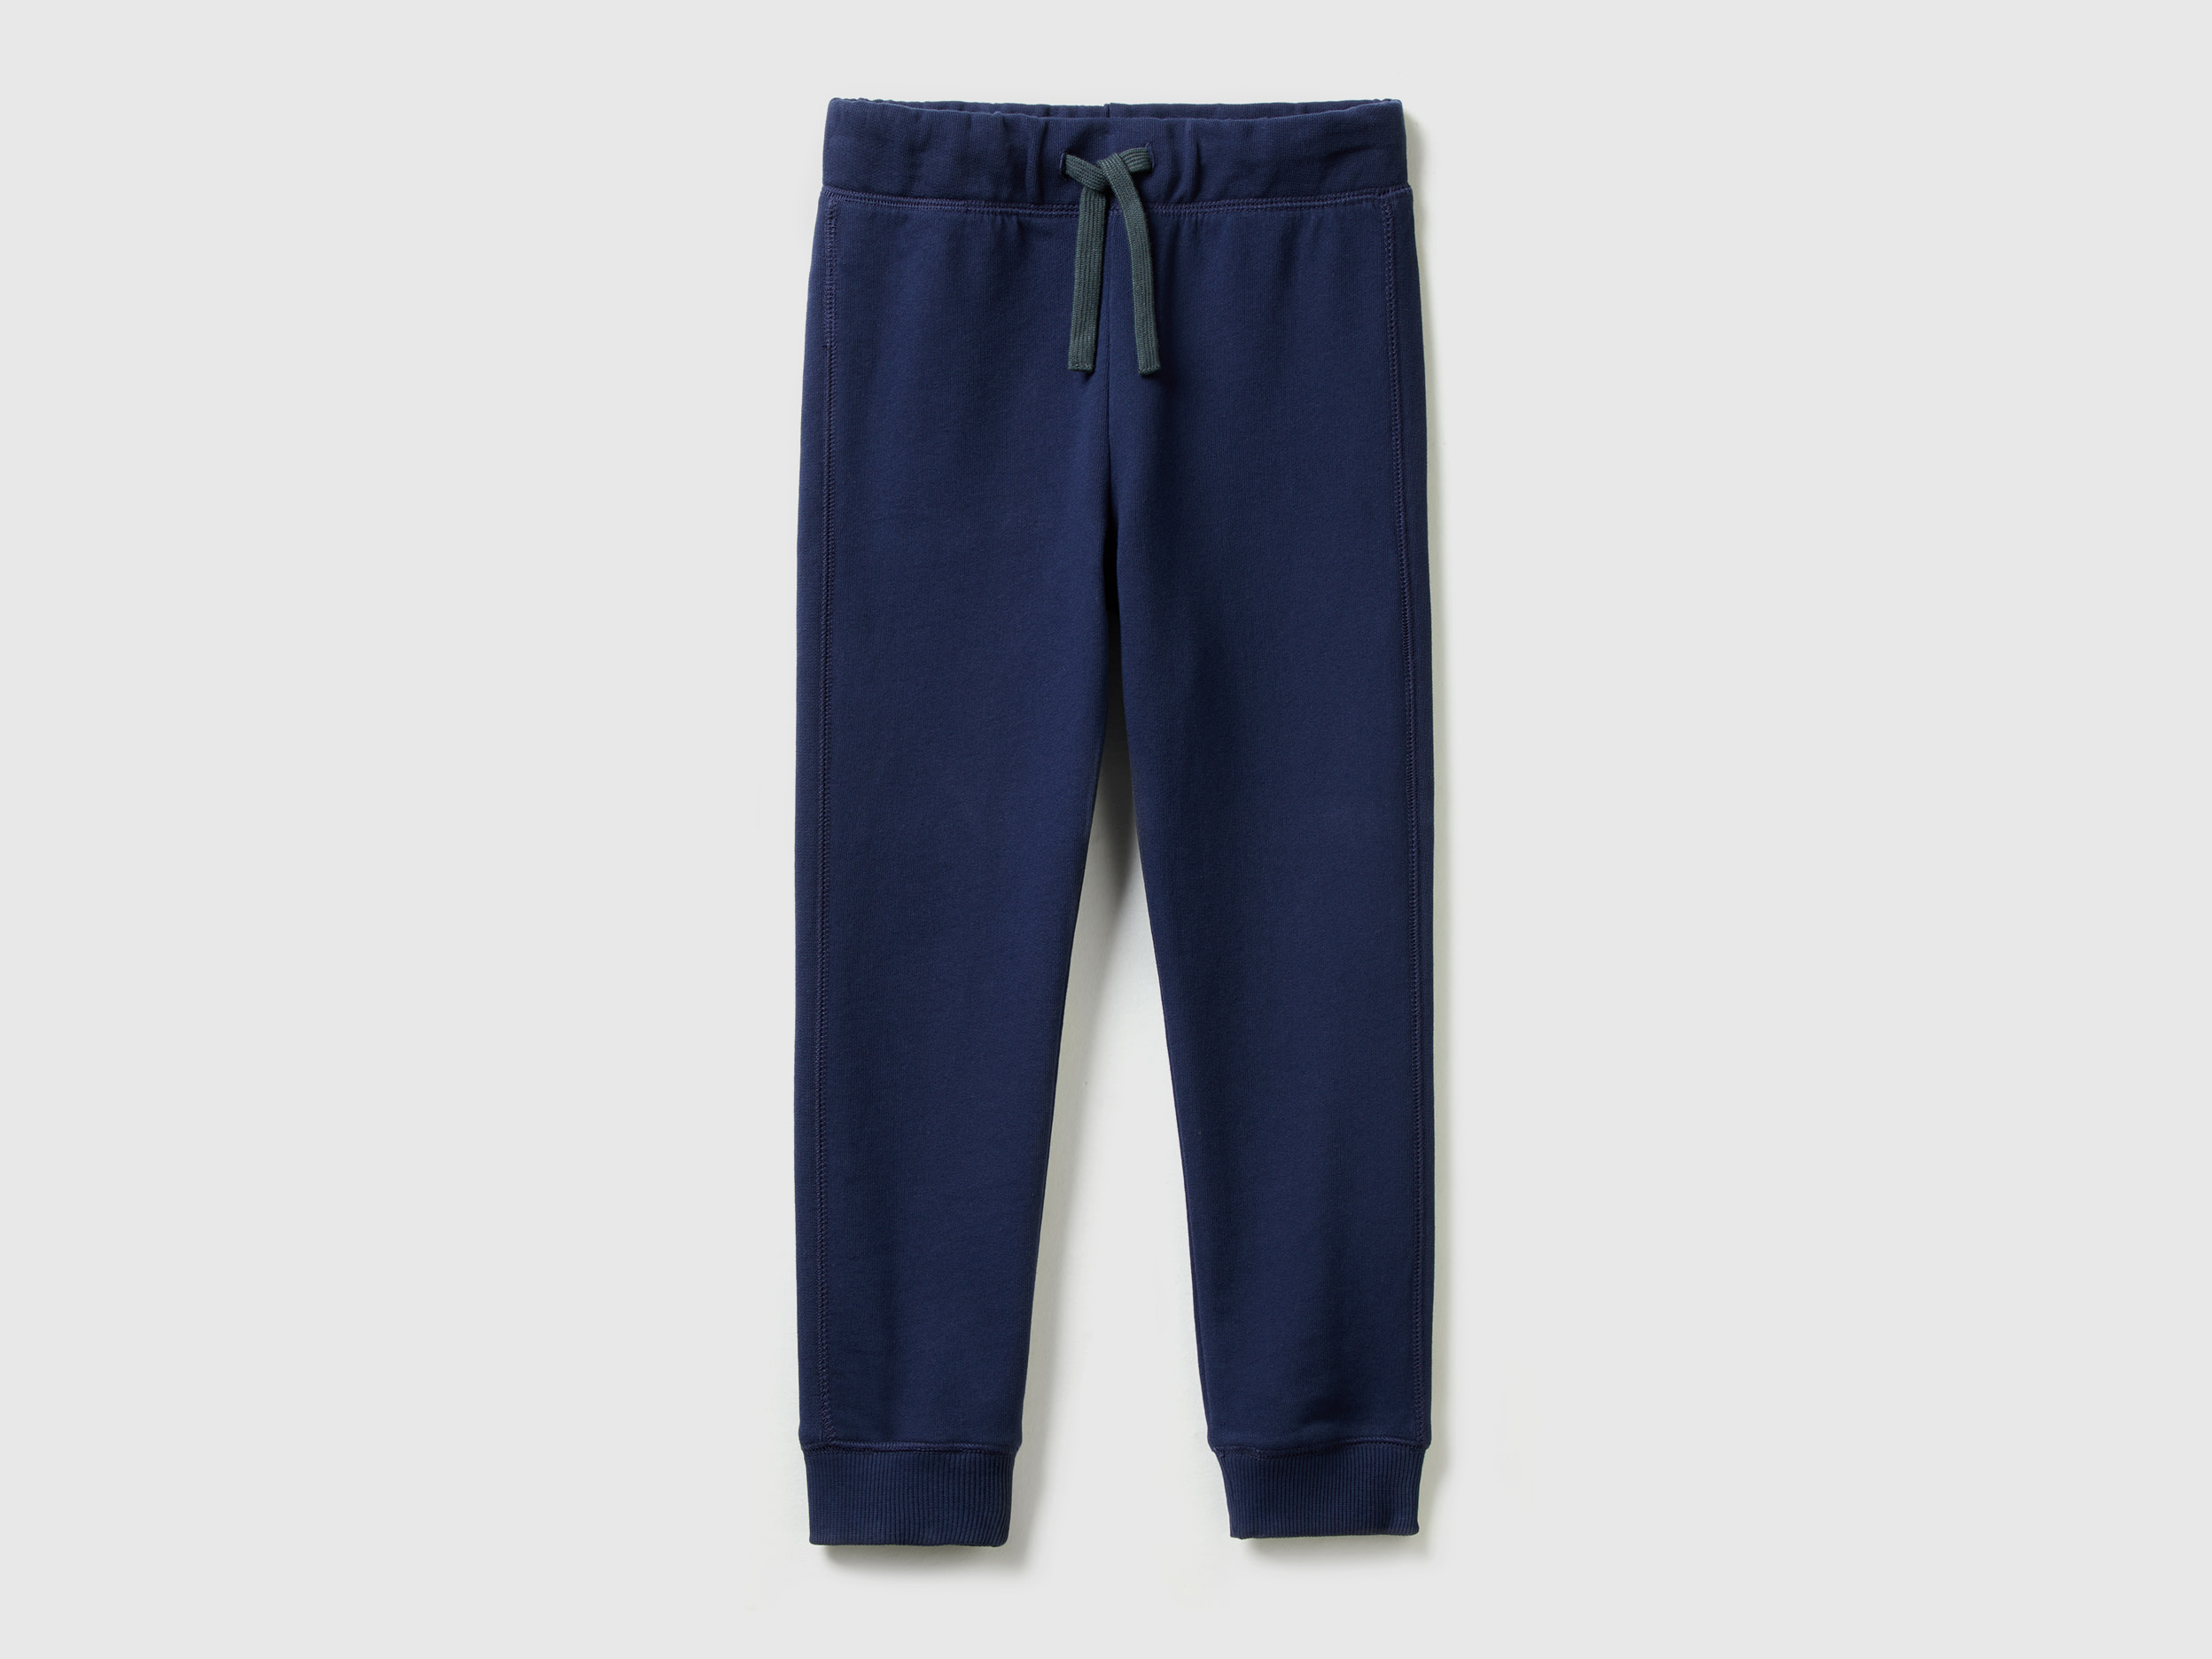 Benetton, 100% Cotton Sweatpants, size 2XL, Dark Blue, Kids